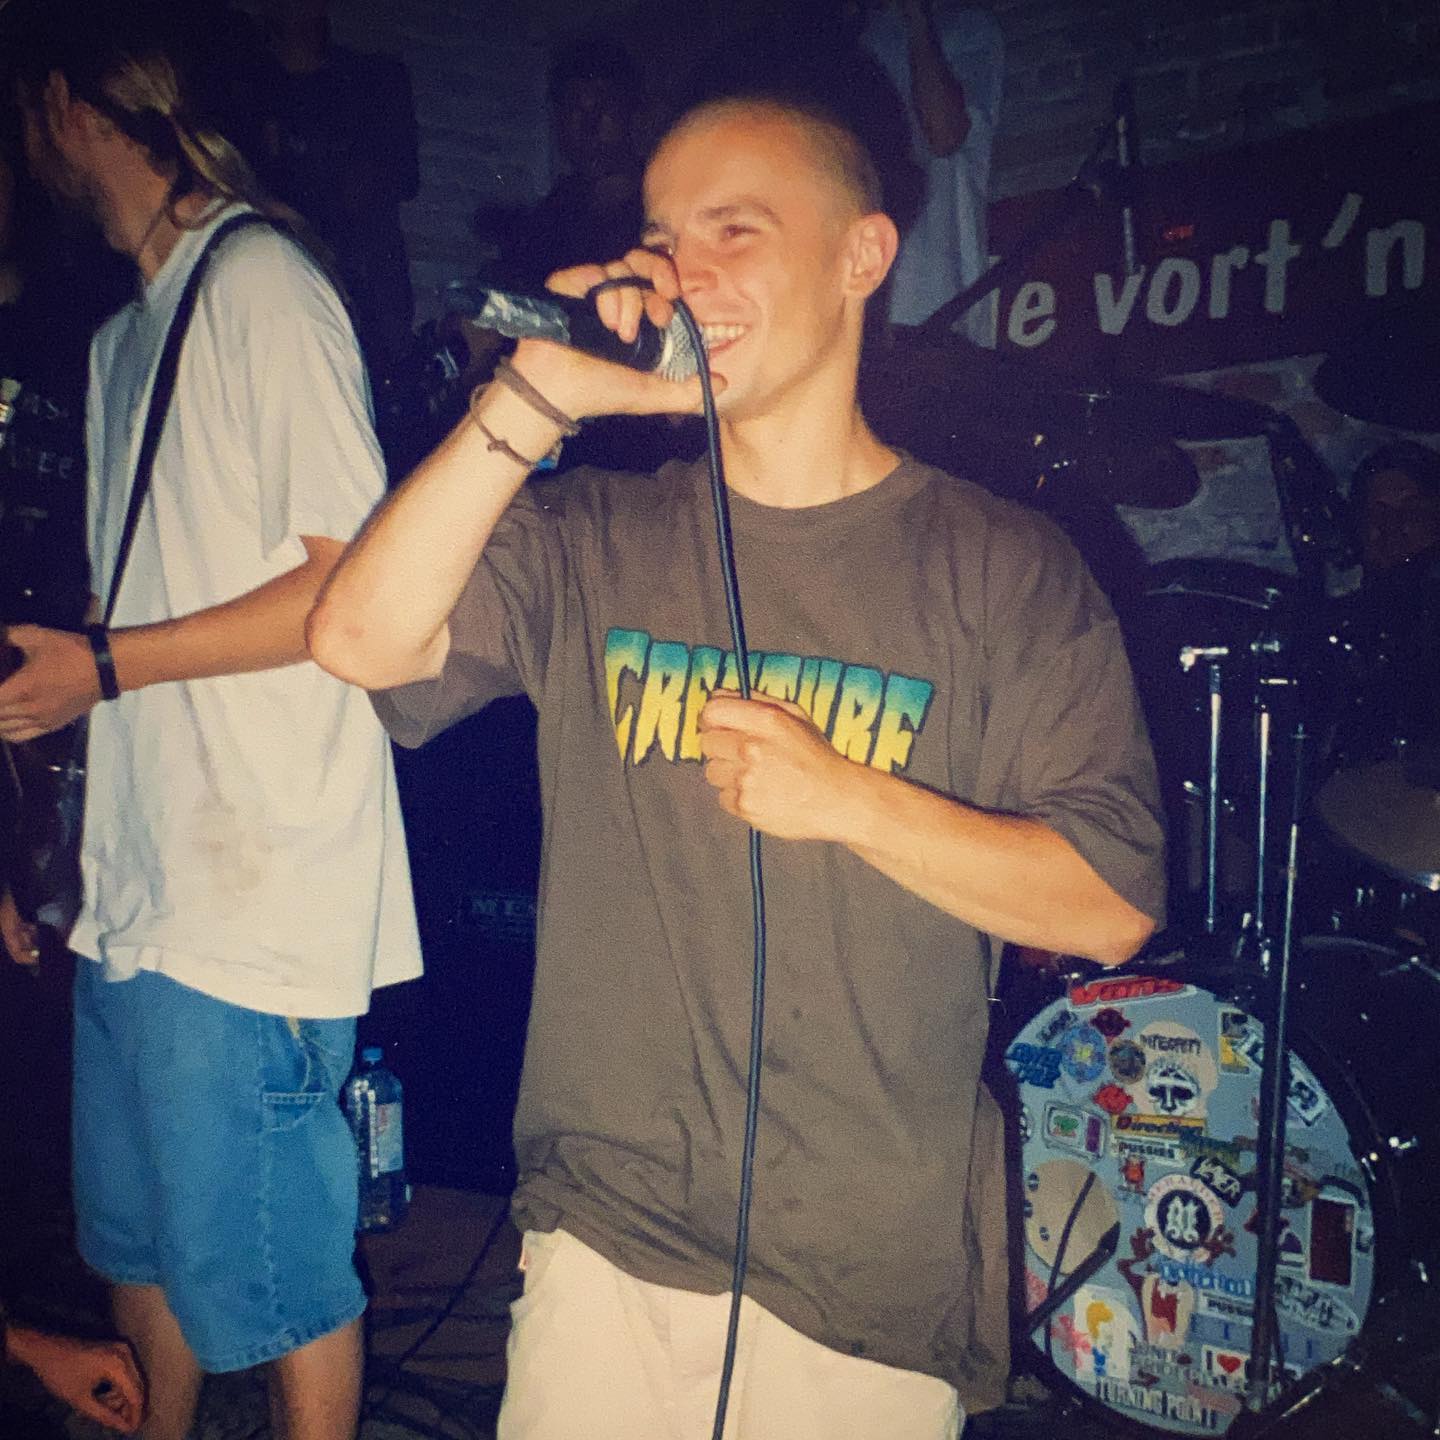 Congress - Hardcore Festival at Vort ’n Vis Ieper (B) - 15/16/17 August 1997 #straightedge #hardcore #metal @goodliferecords #gigpic by @twentylandcrew